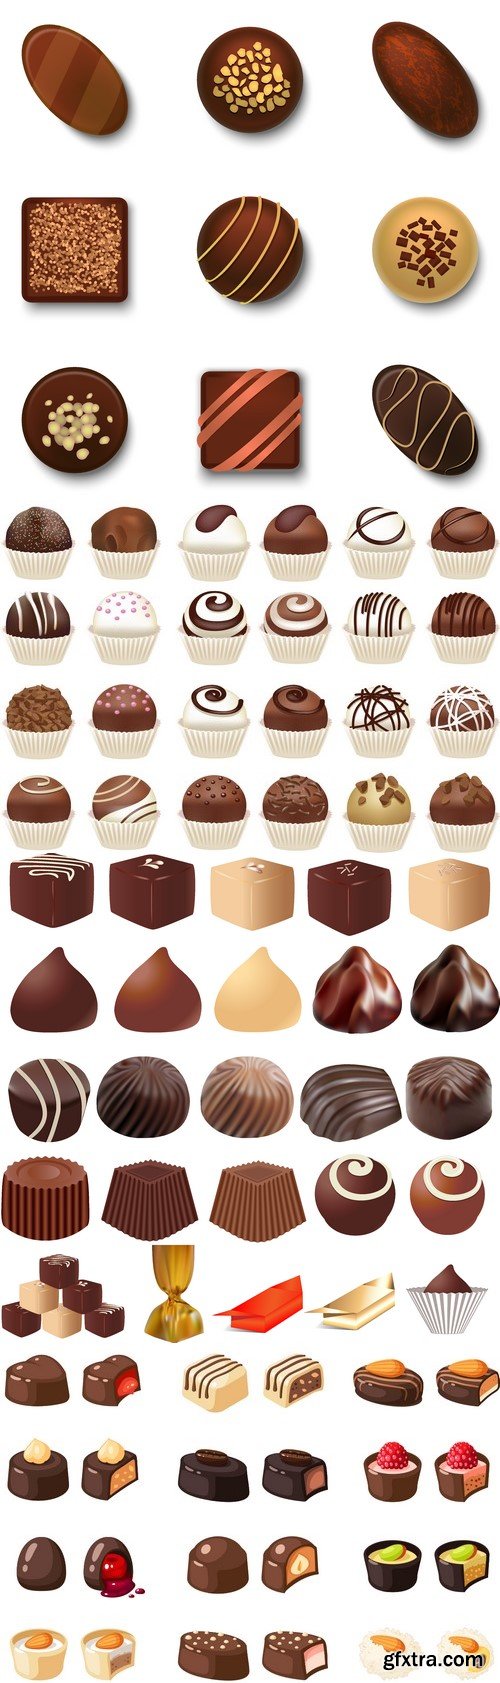 Vectors - Different Chocolate Candies 7